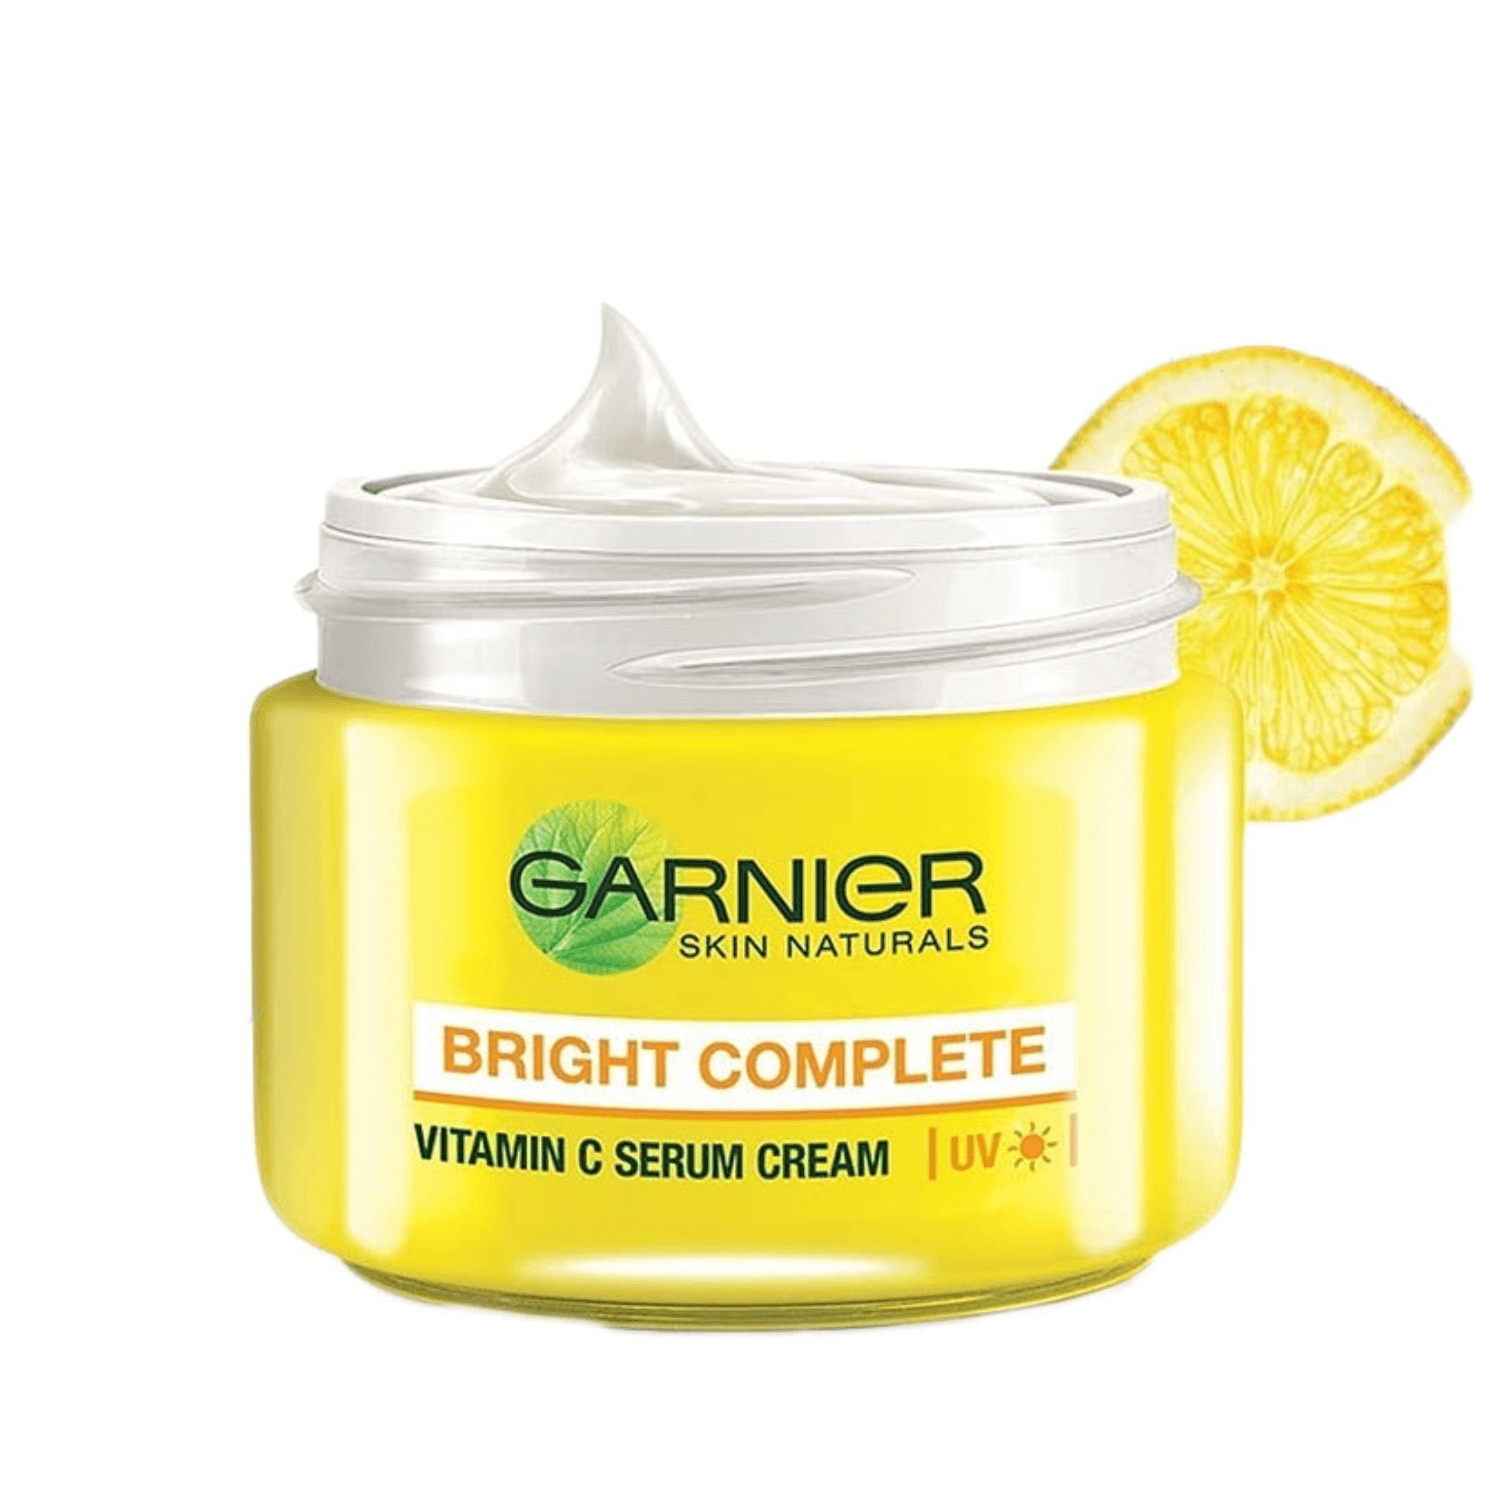 Garnier Vitamin C Serum Cream - 22 gm